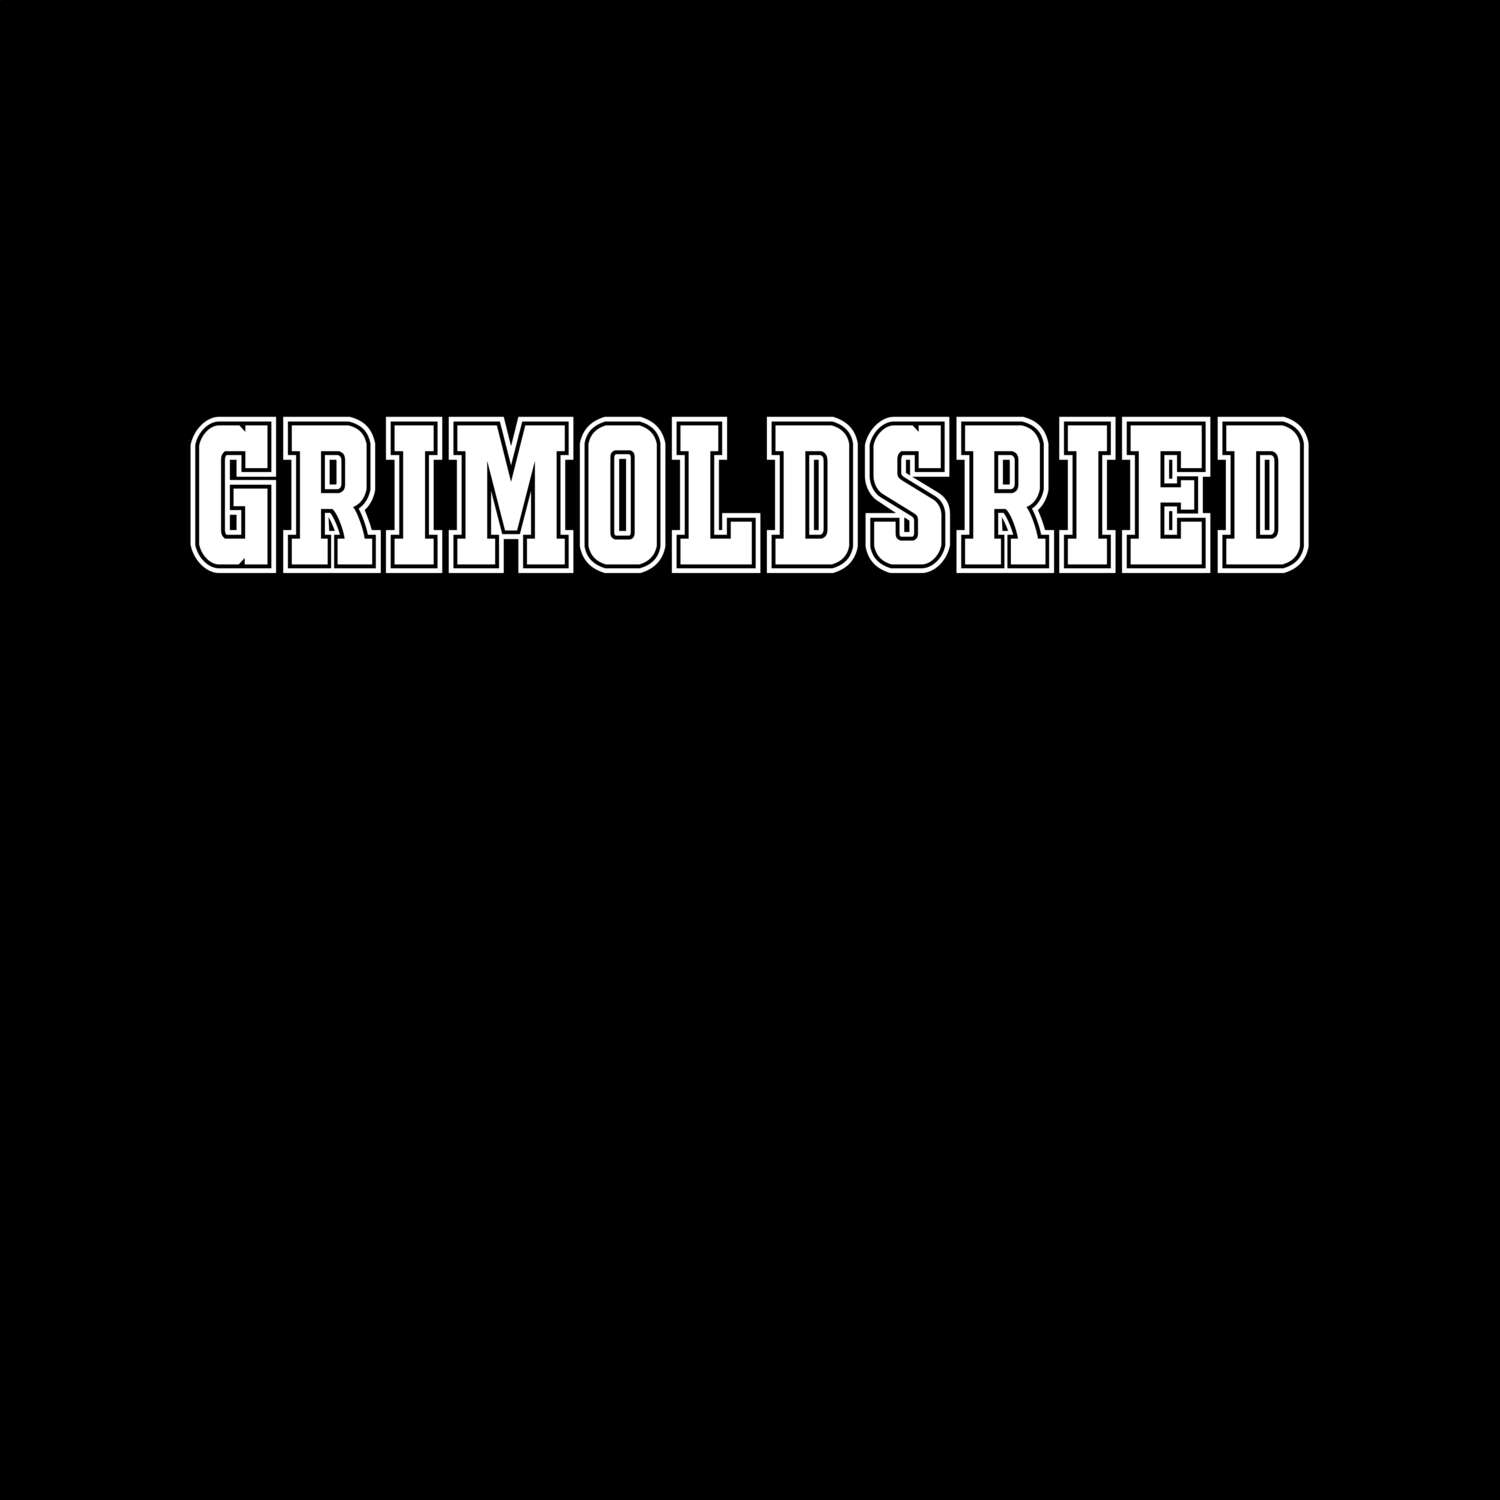 Grimoldsried T-Shirt »Classic«